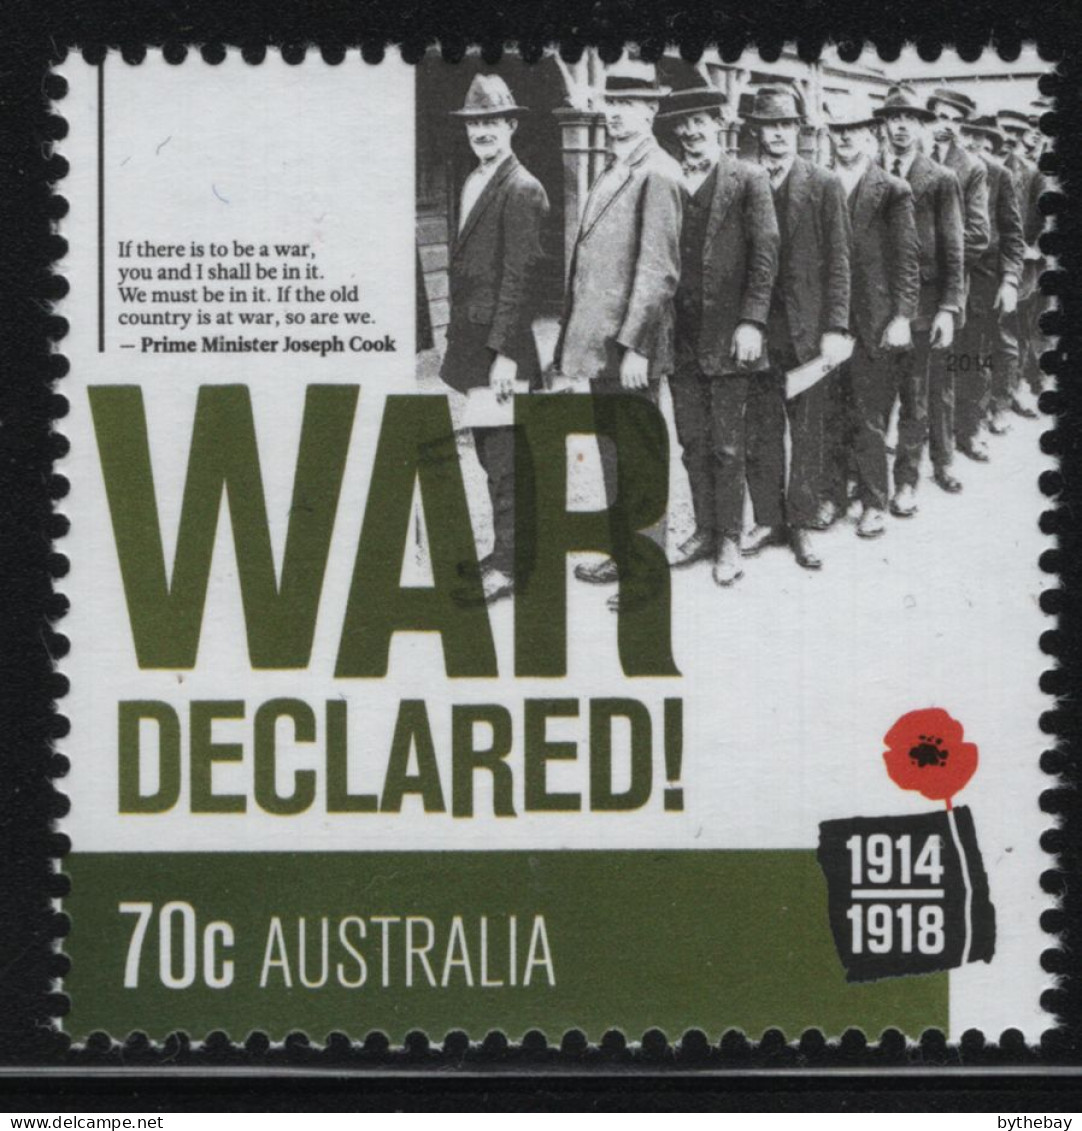 Australia 2014 MNH Sc 4100 70c War Declared! WWI Centenary - Mint Stamps